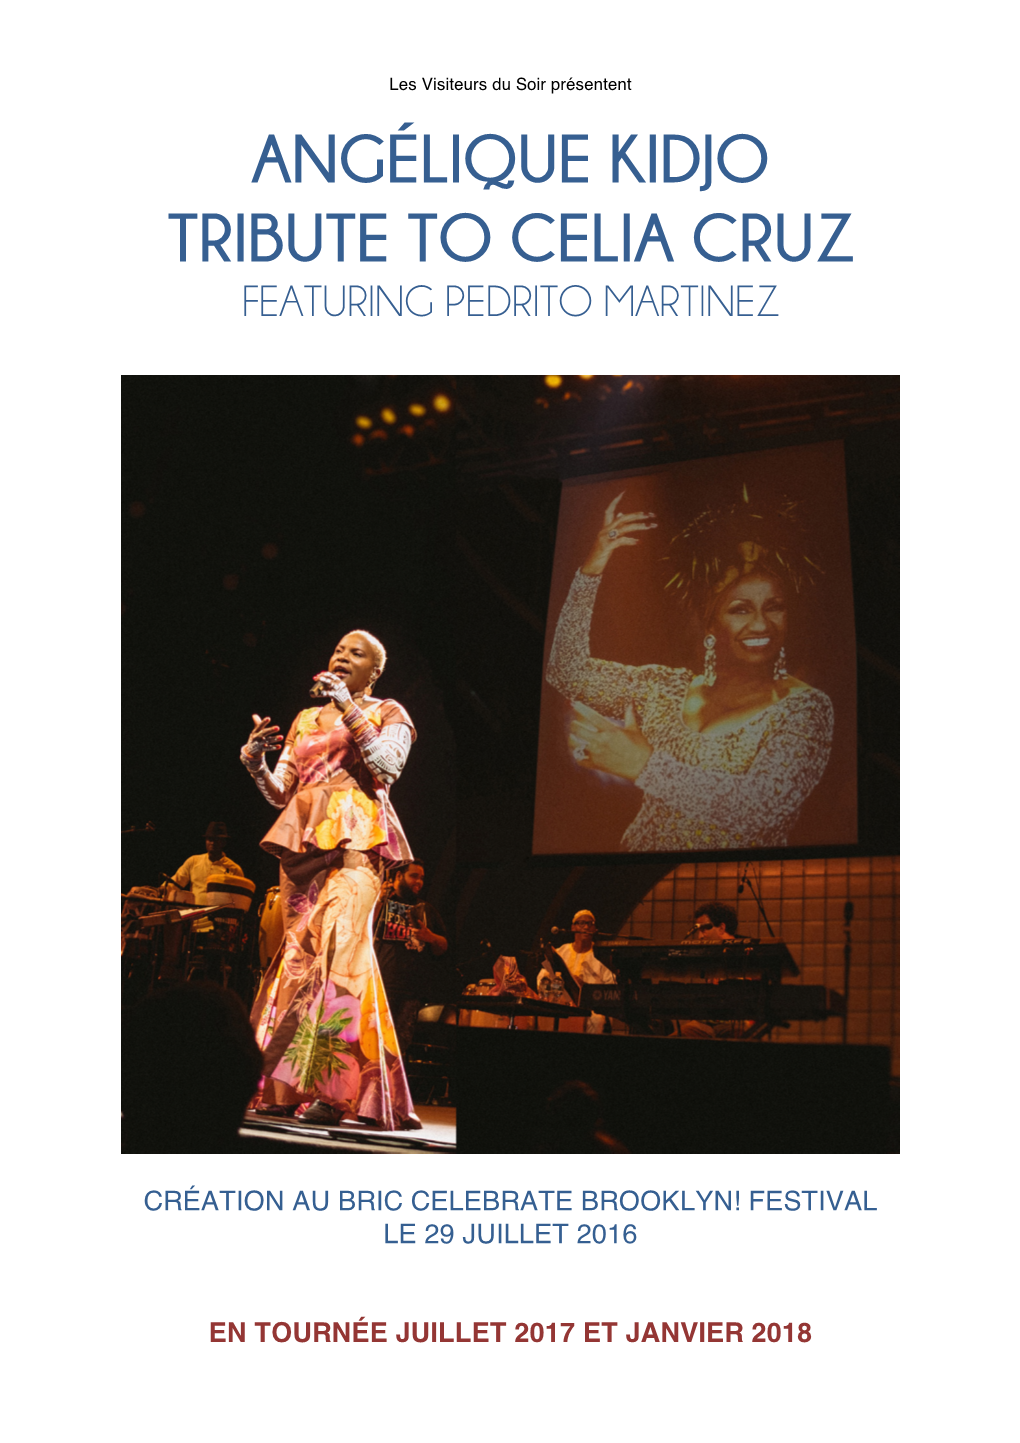 Angélique Kidjo Tribute to Celia Cruz Featuring Pedrito Martinez